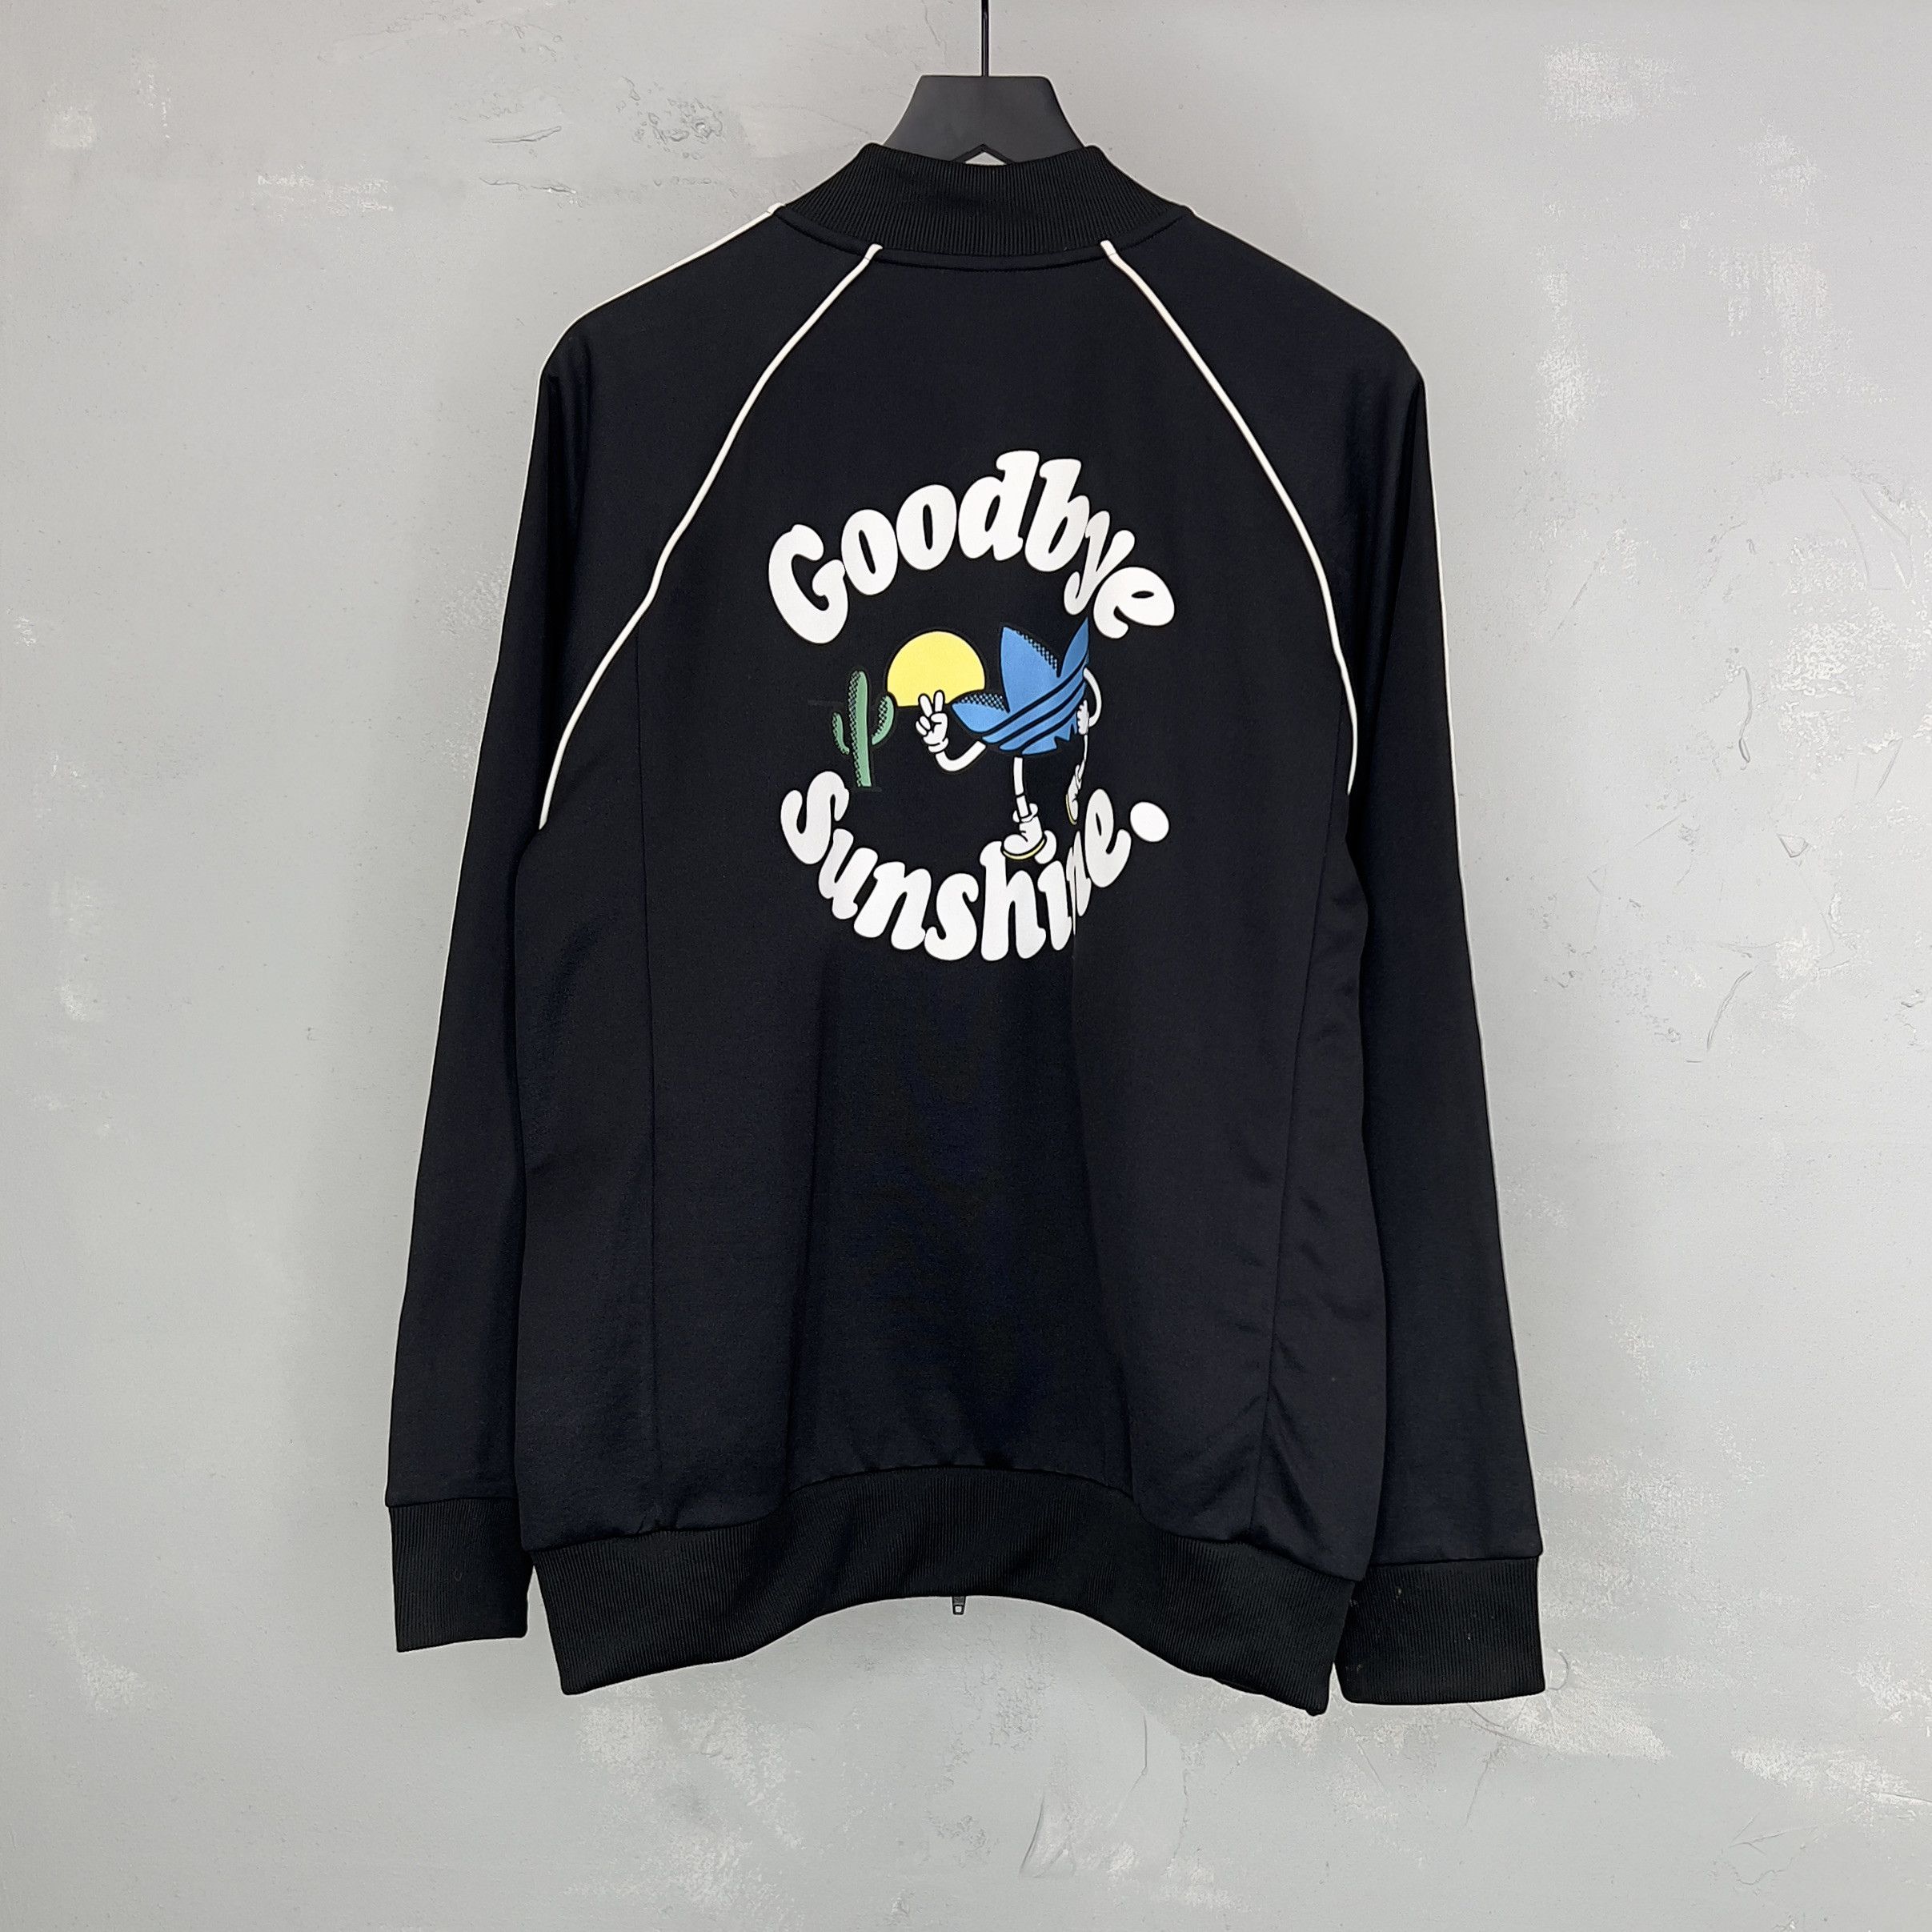 Adidas Adidas Originals x Coachella Goodbye Sunshine Track Jacket | Grailed